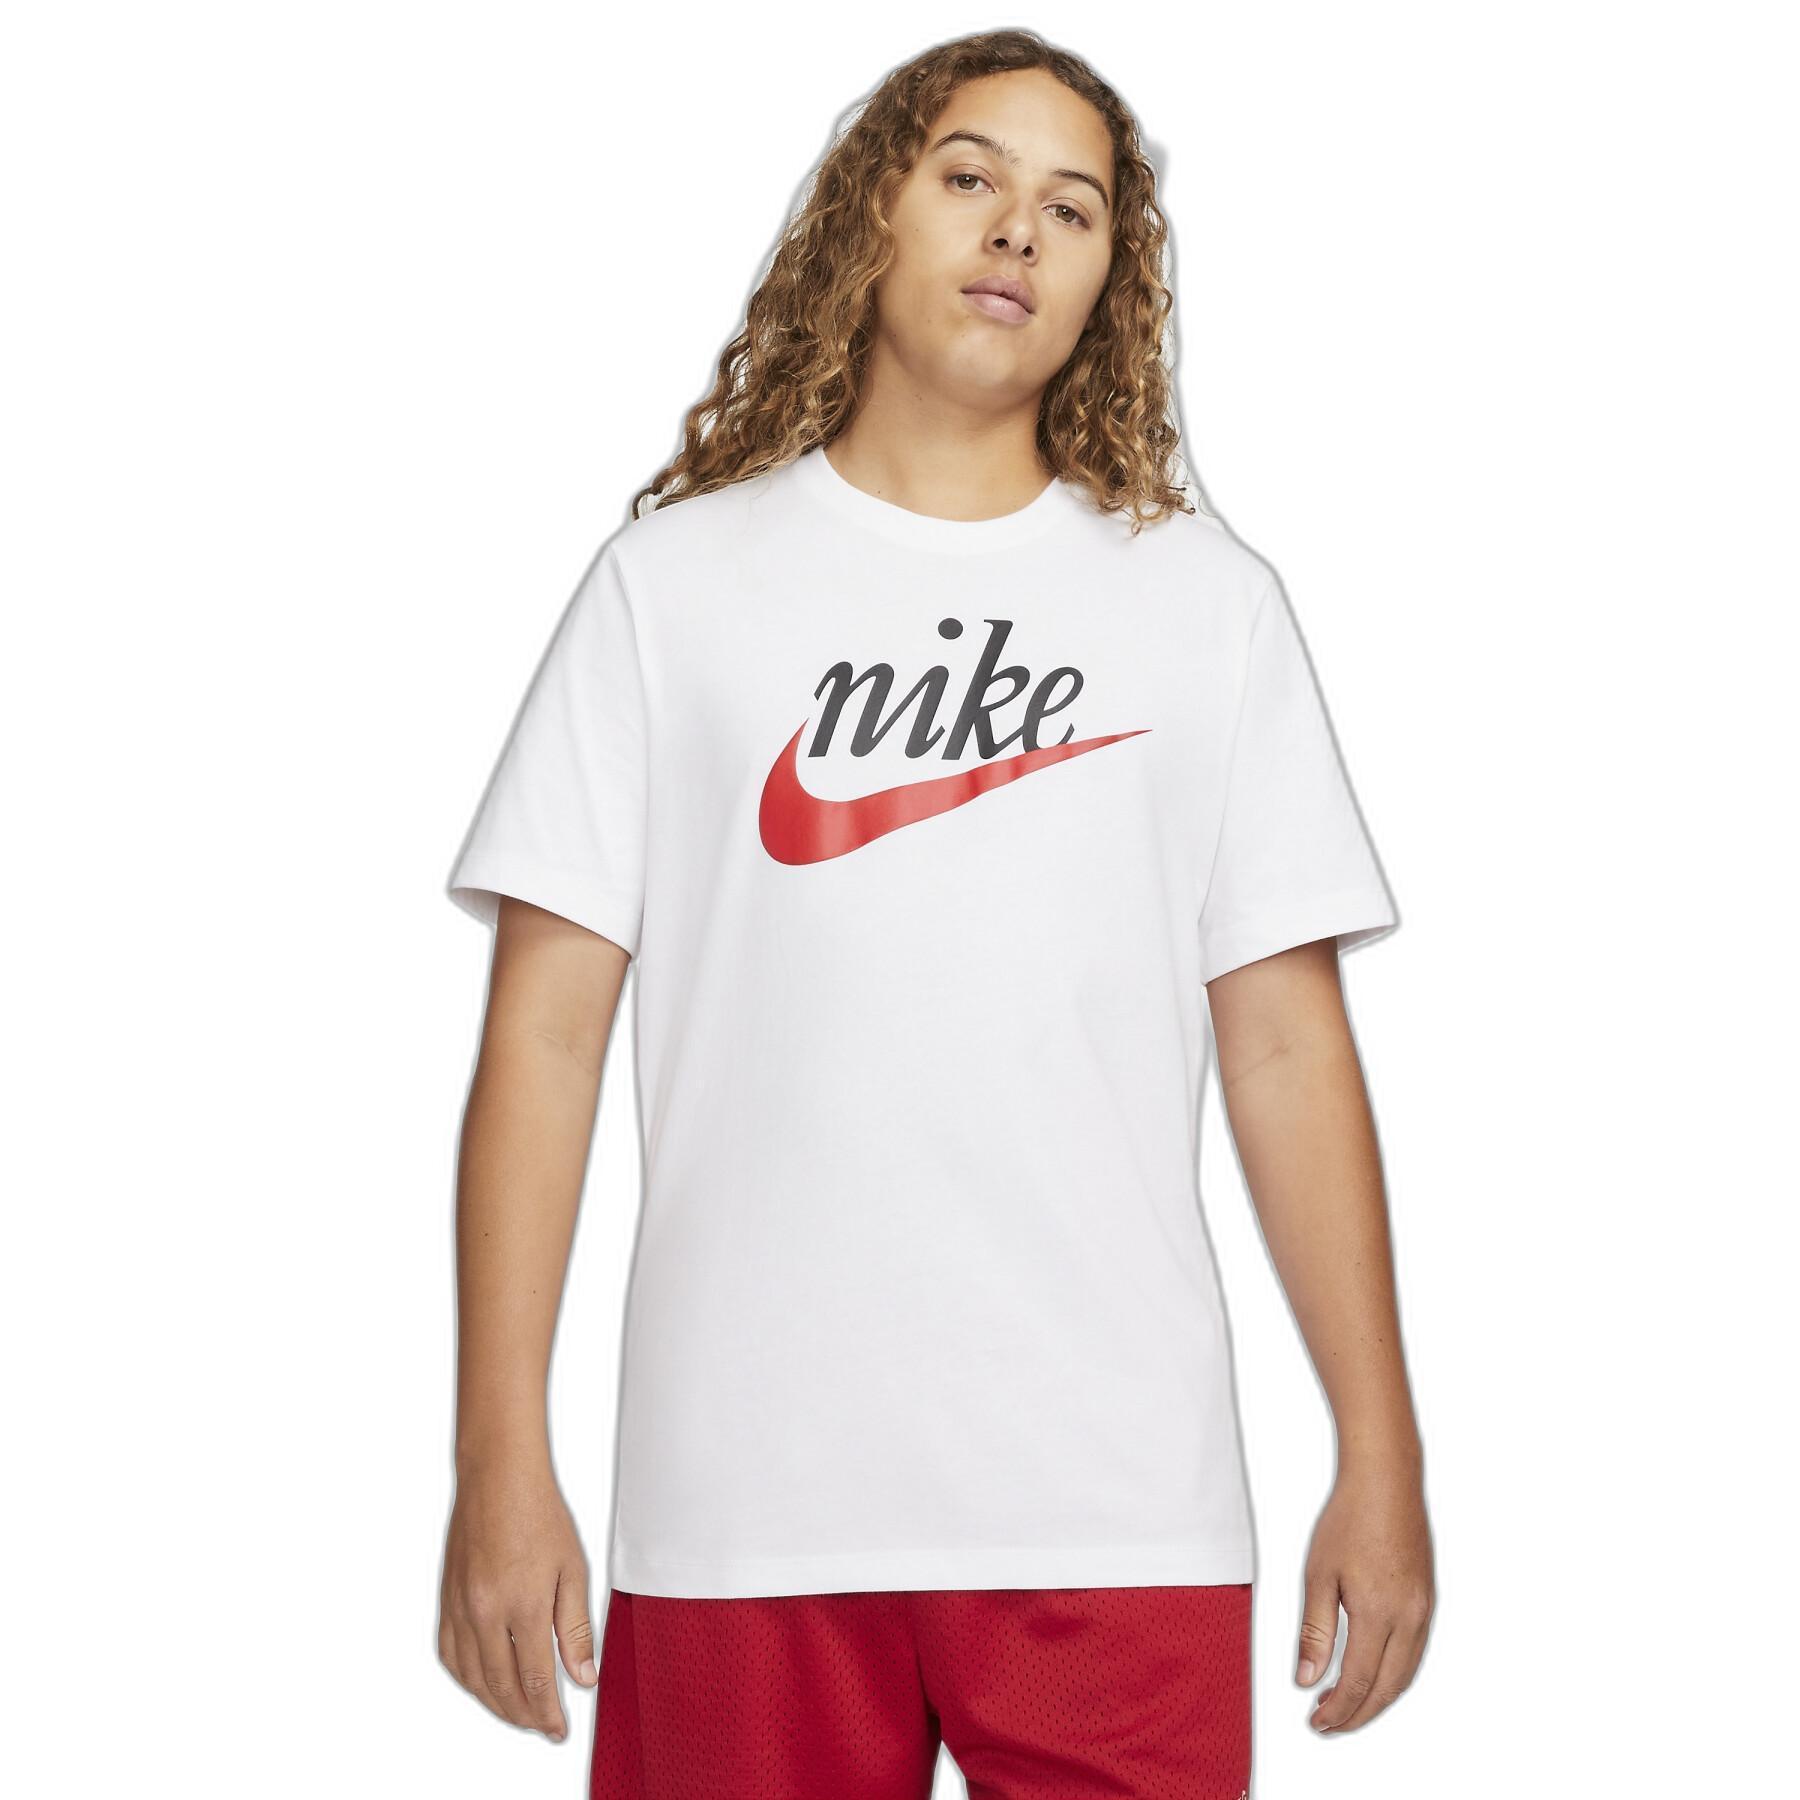 Camiseta Nike Futura 2